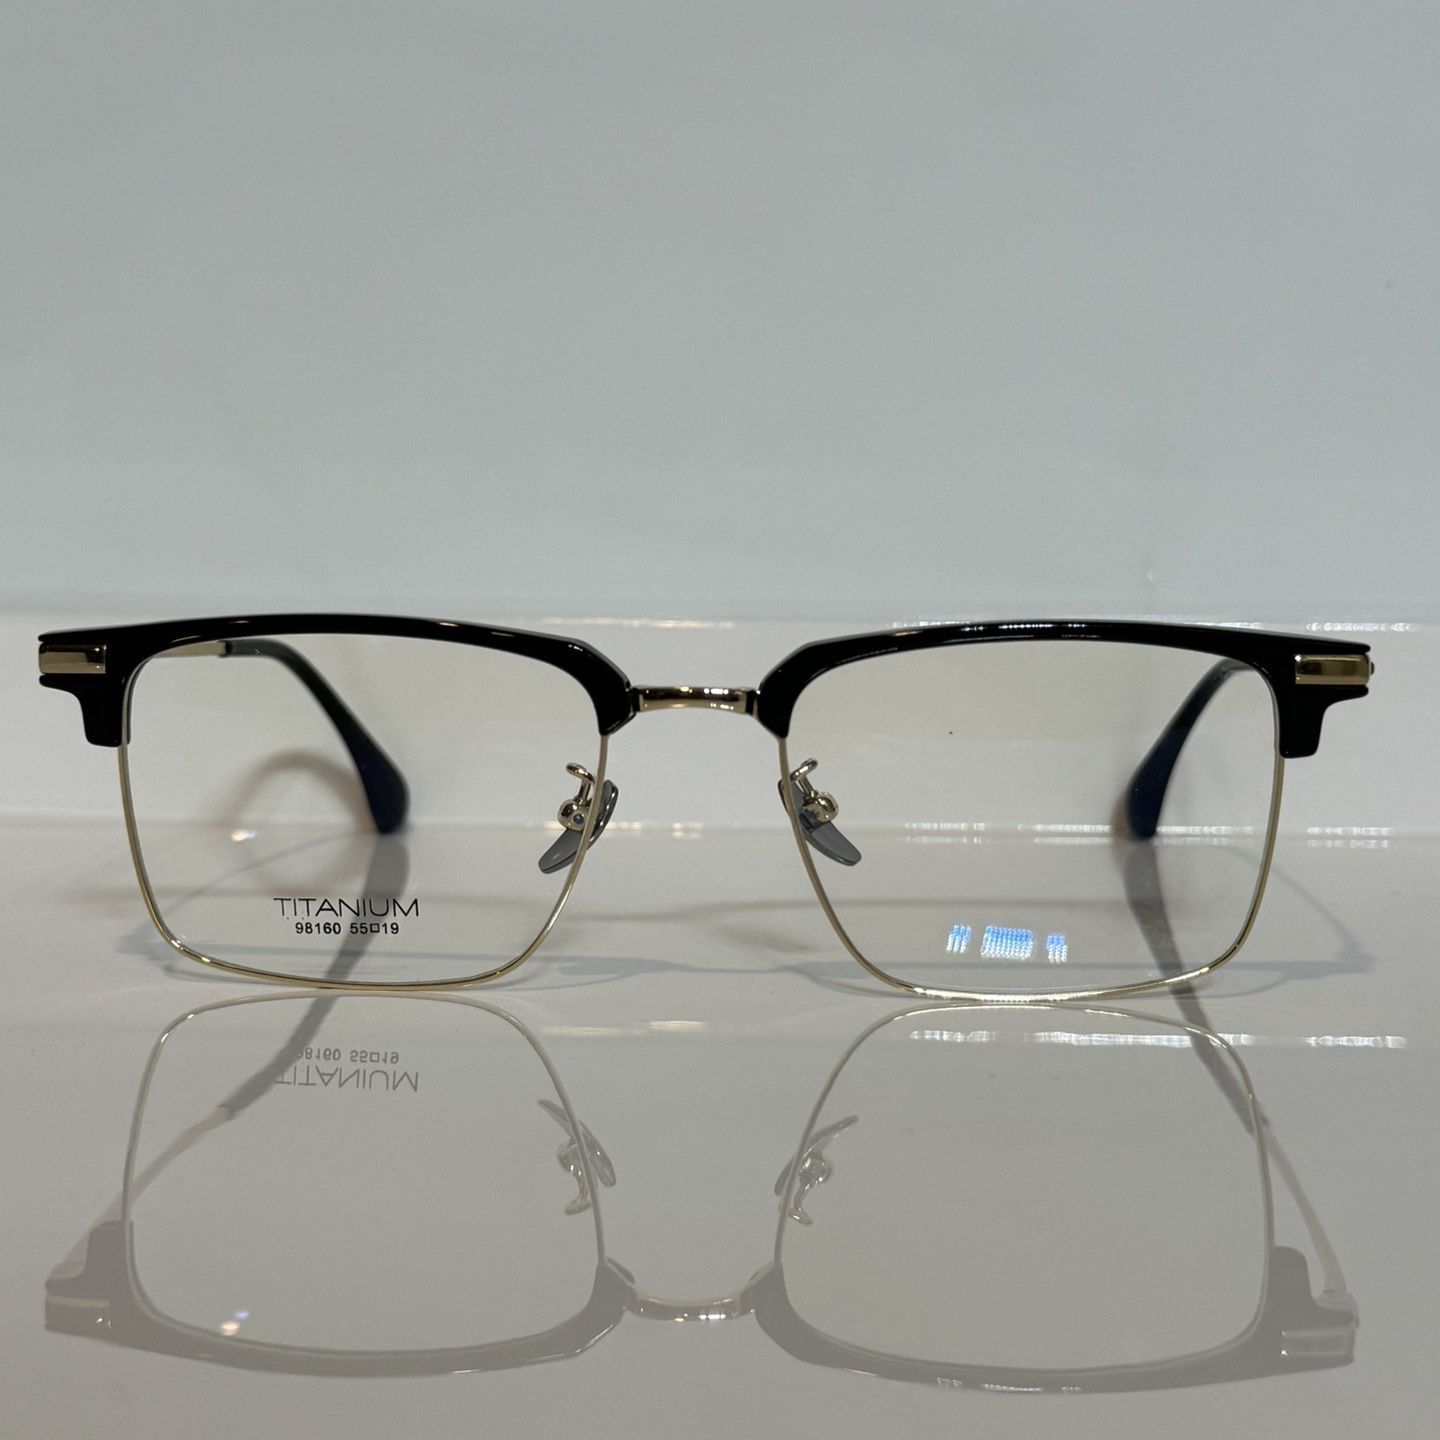 New Korean style 98160 Titanium metal men’s eyeglasses 55mm